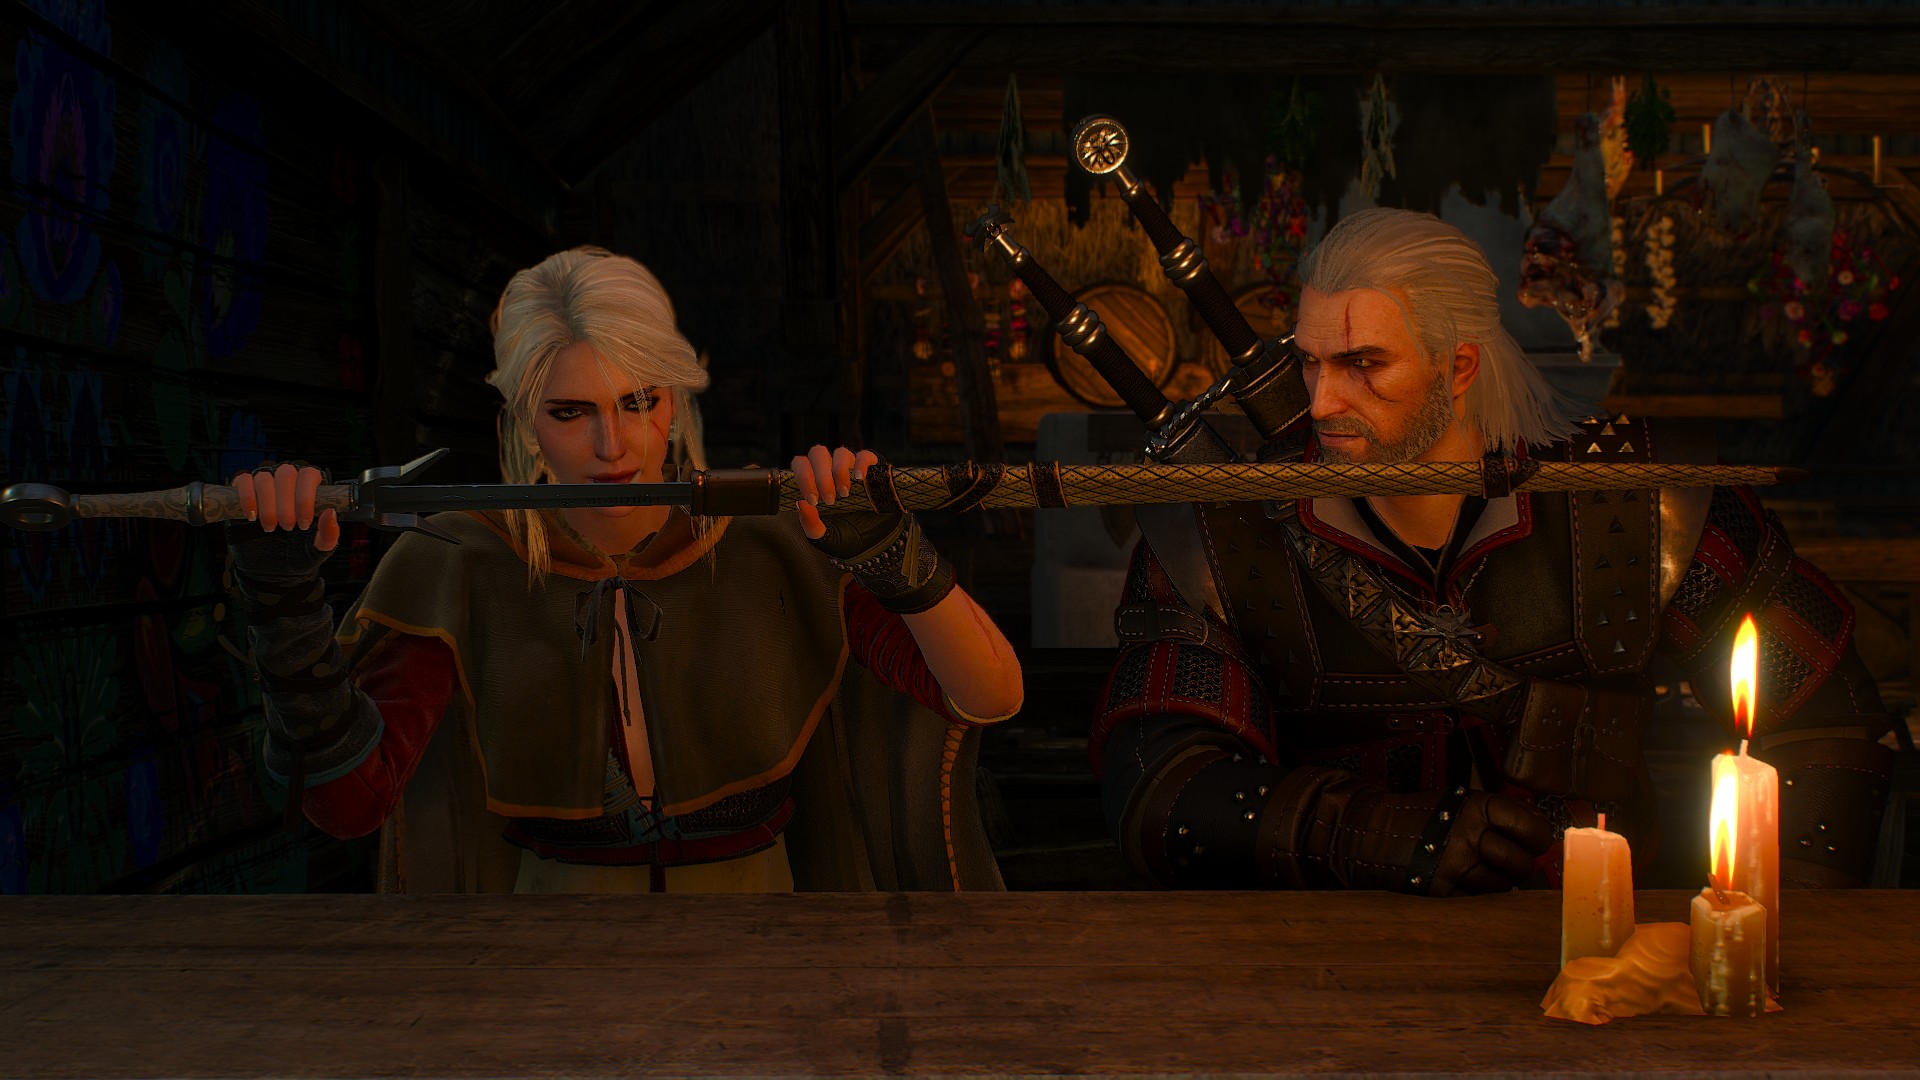 Geralt of Rivia, Cirilla Fiona Elen Riannon, The Witcher 3: Wild Hunt, Video games, CD Projekt RED, Ciri, The Witcher Wallpaper